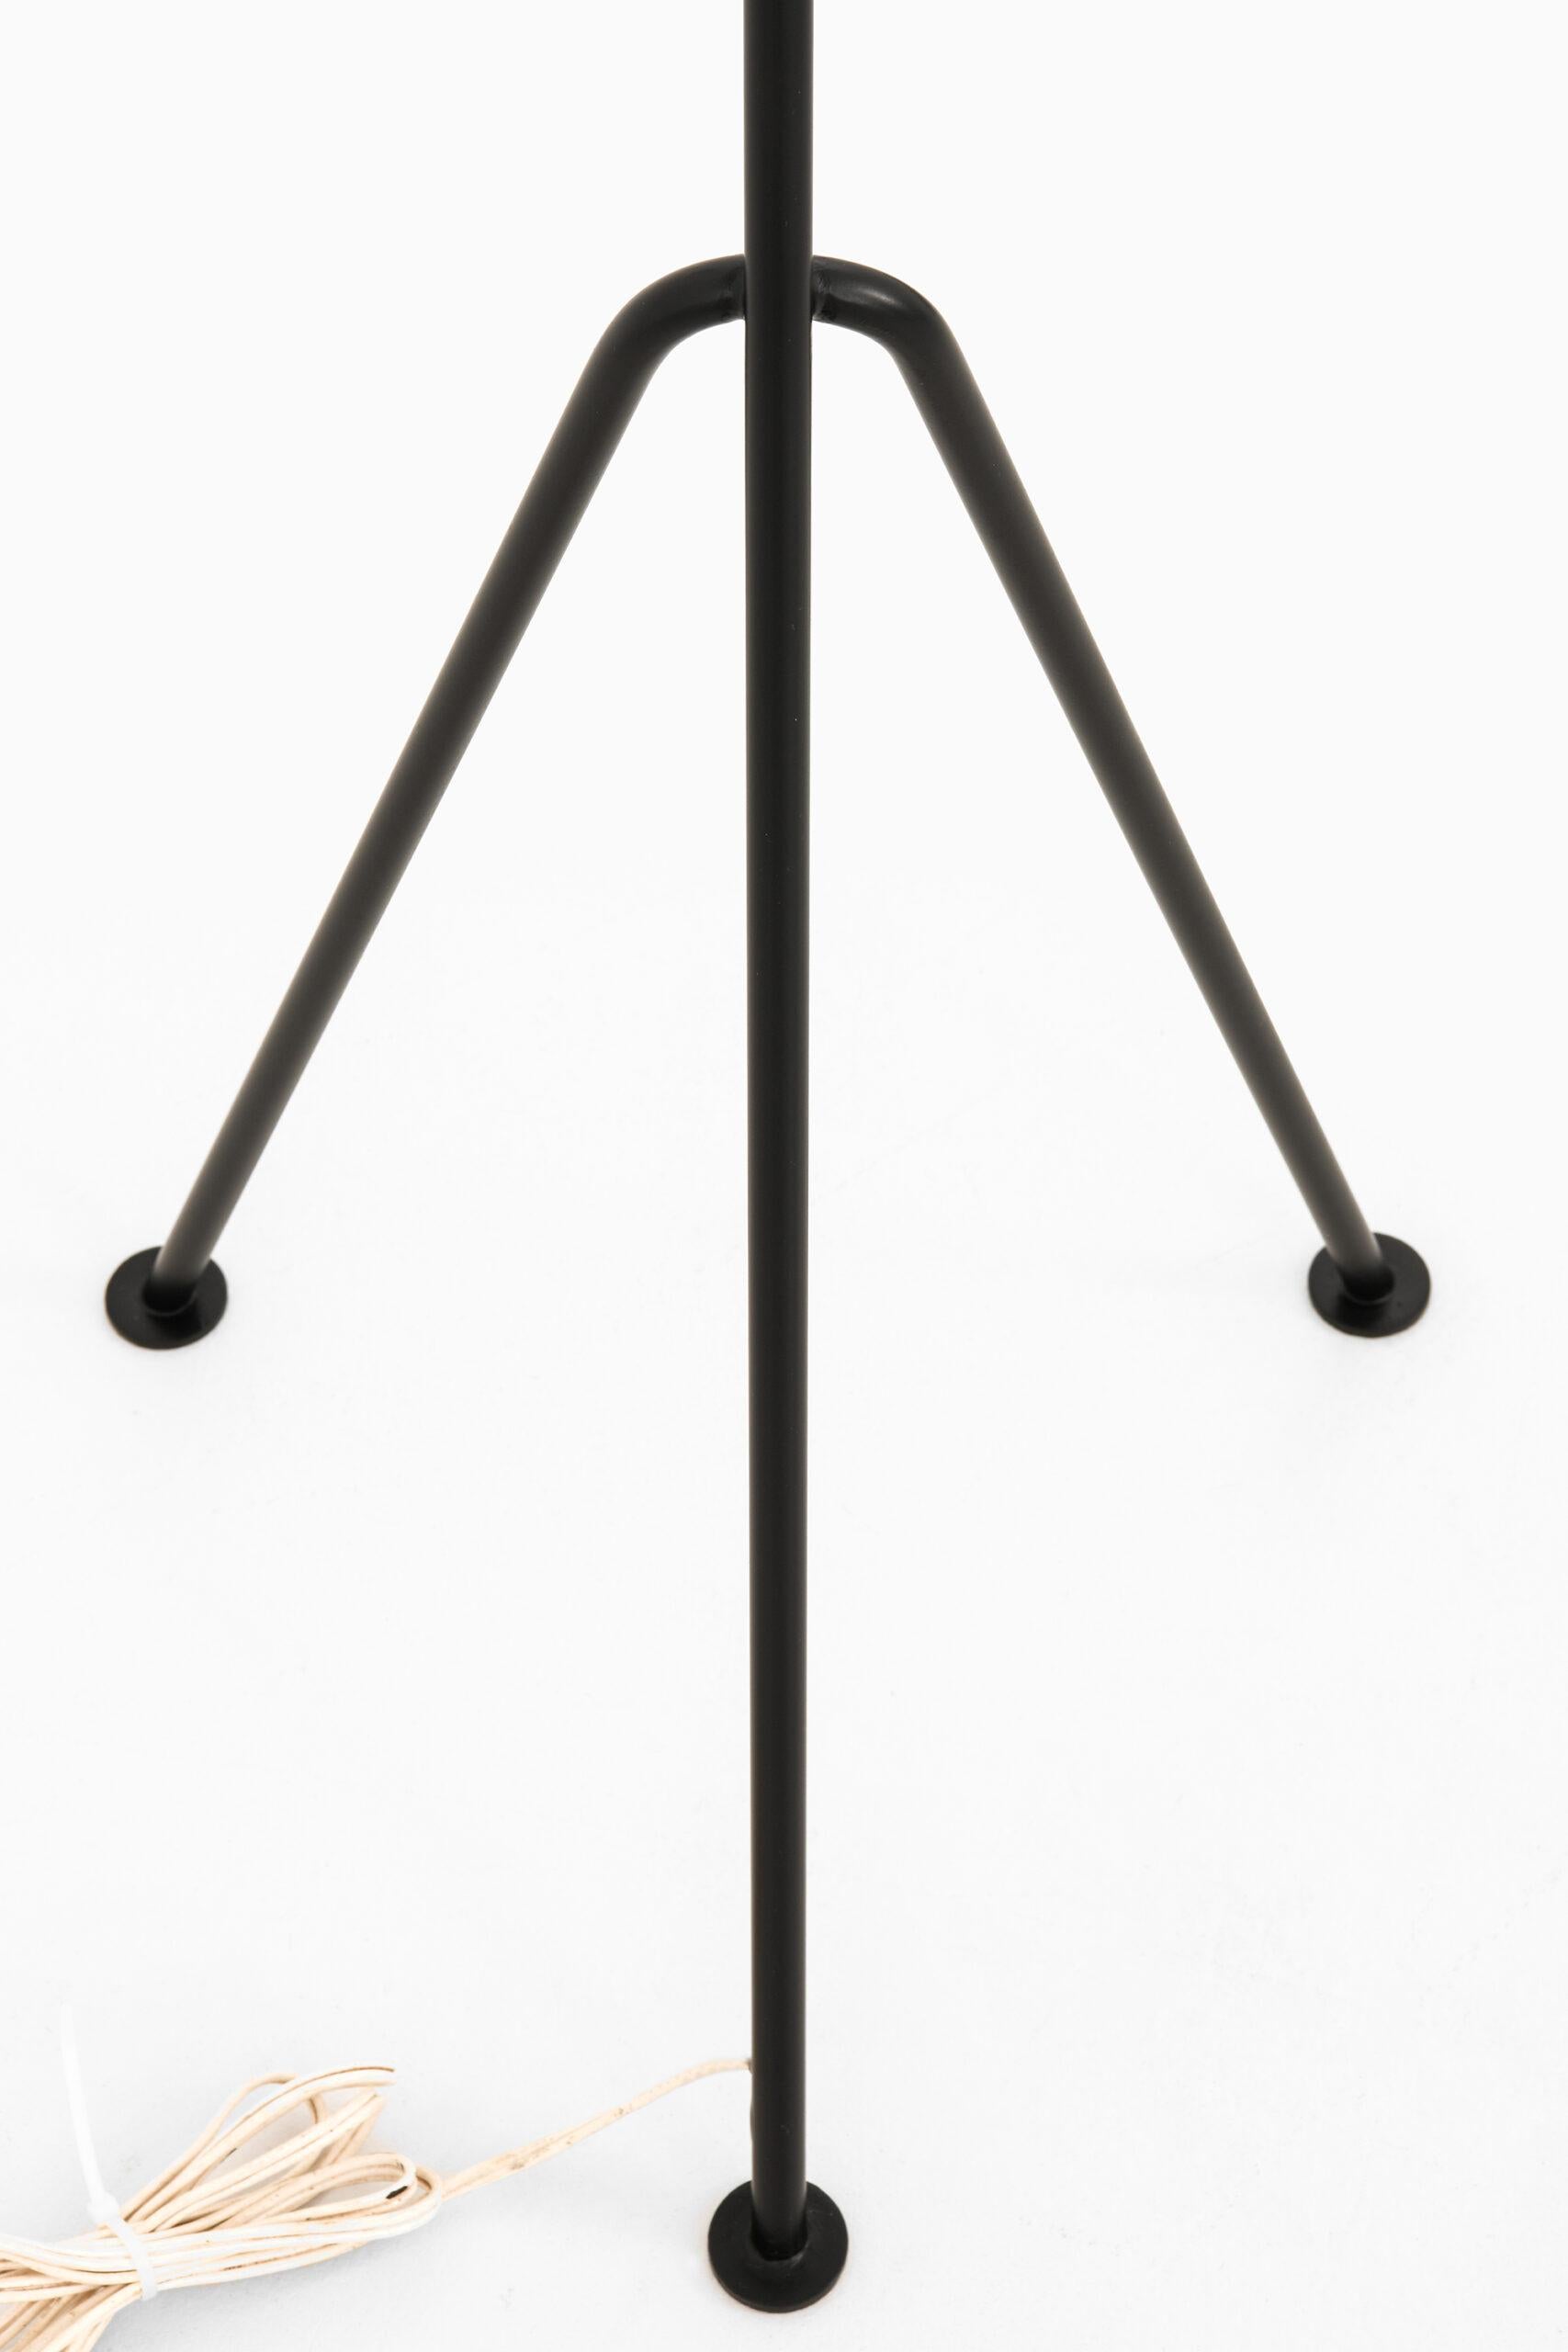 Scandinavian Modern Greta Magnusson Grossman Floor Lamp Model G-33 / Grasshopper Produced by Bergbom For Sale